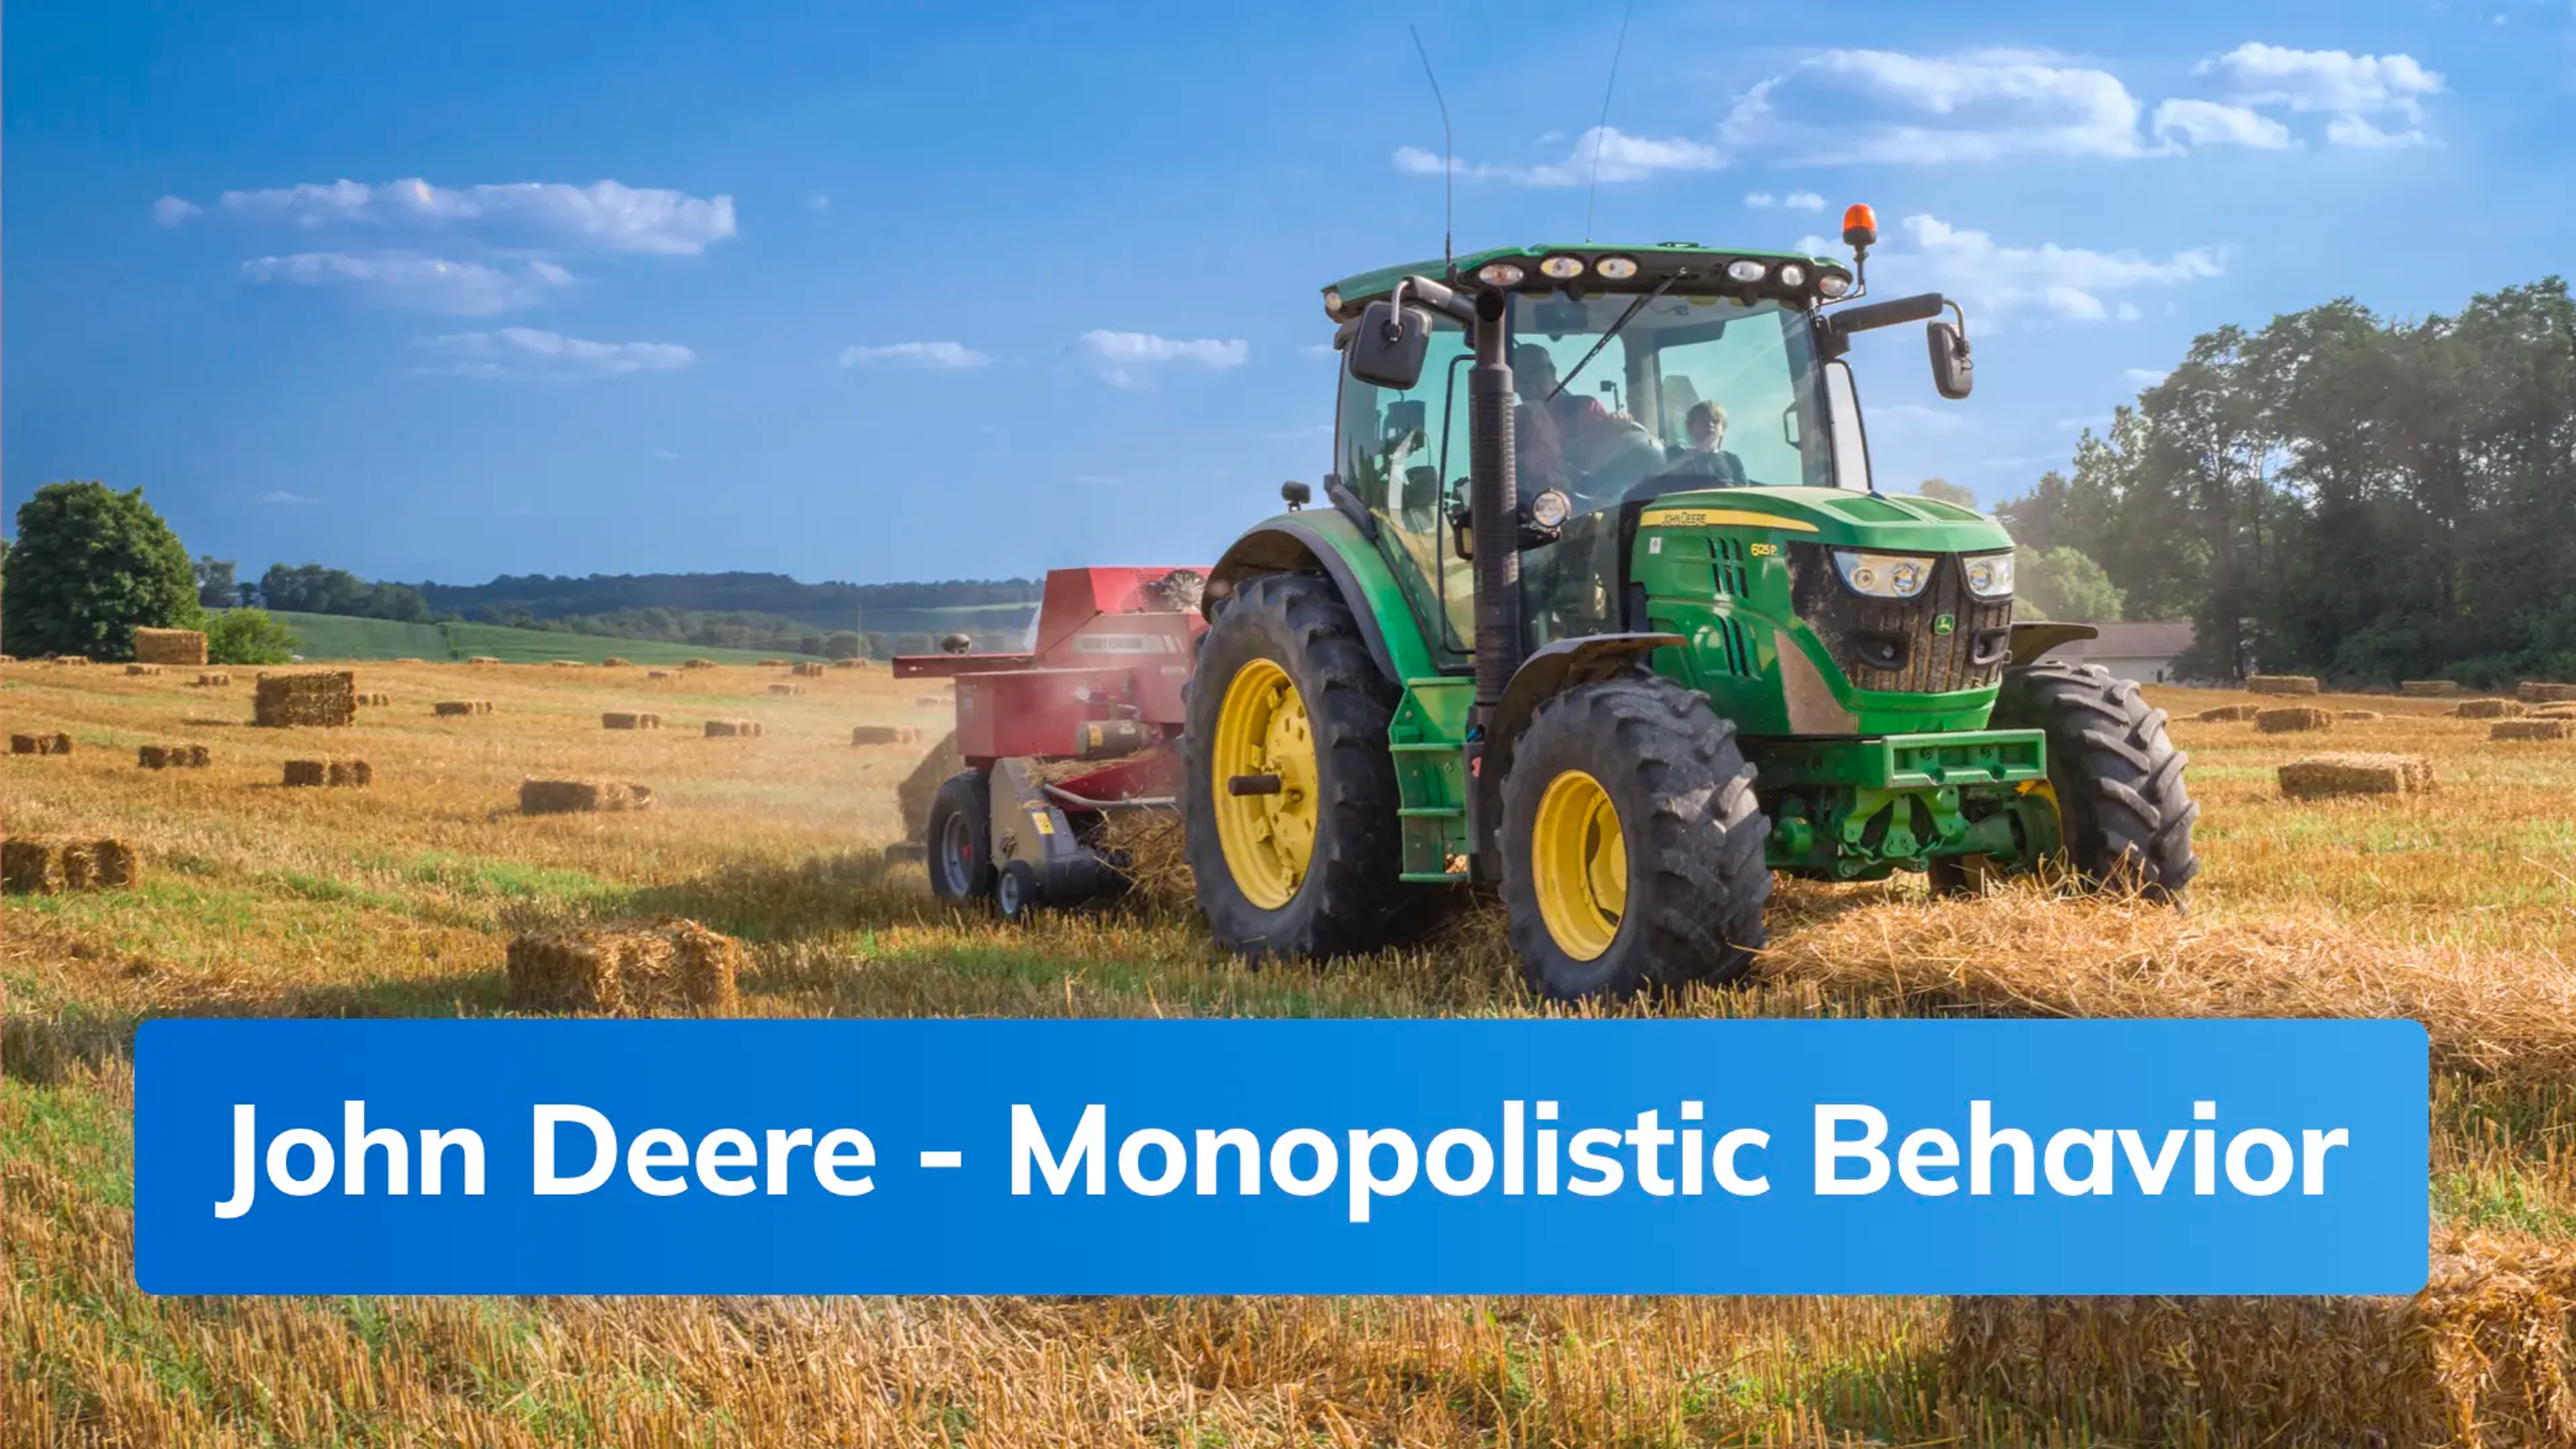 John Deere - Monopolistic Behavior